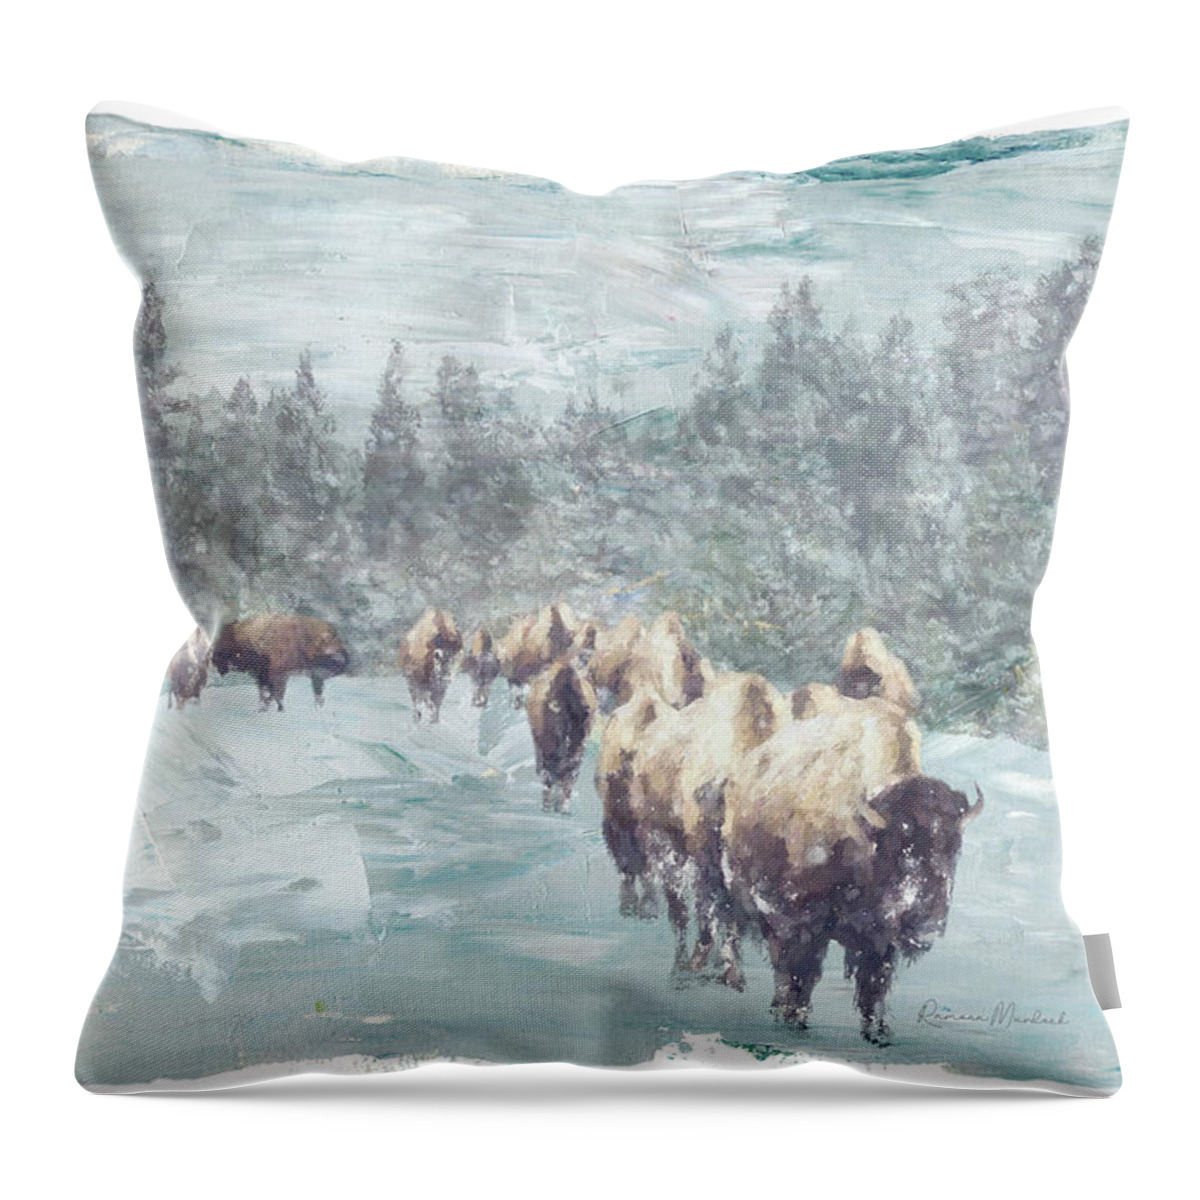 Abstract Throw Pillow featuring the digital art Buffalo Herd by Ramona Murdock